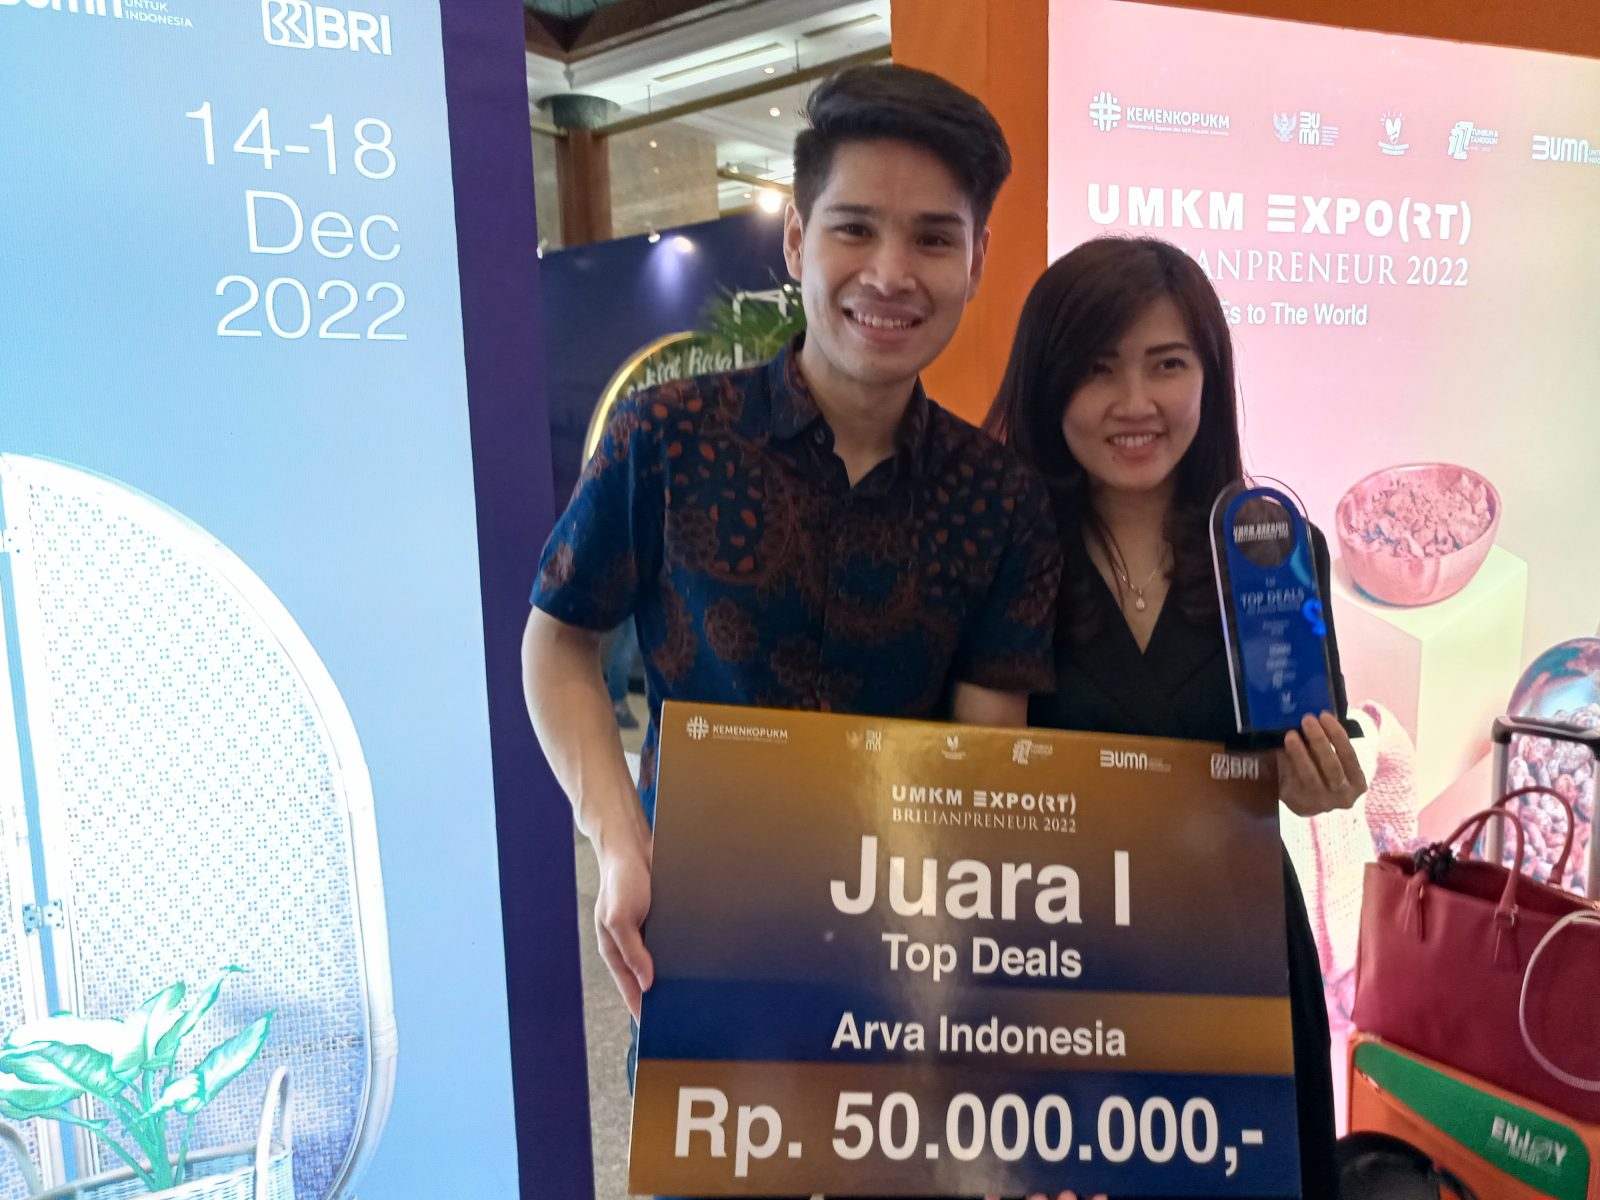 Wira Kusuma Juara 1 Top Deal Arva Indonesia di Pameran UMKM Brilianpreneur 2022